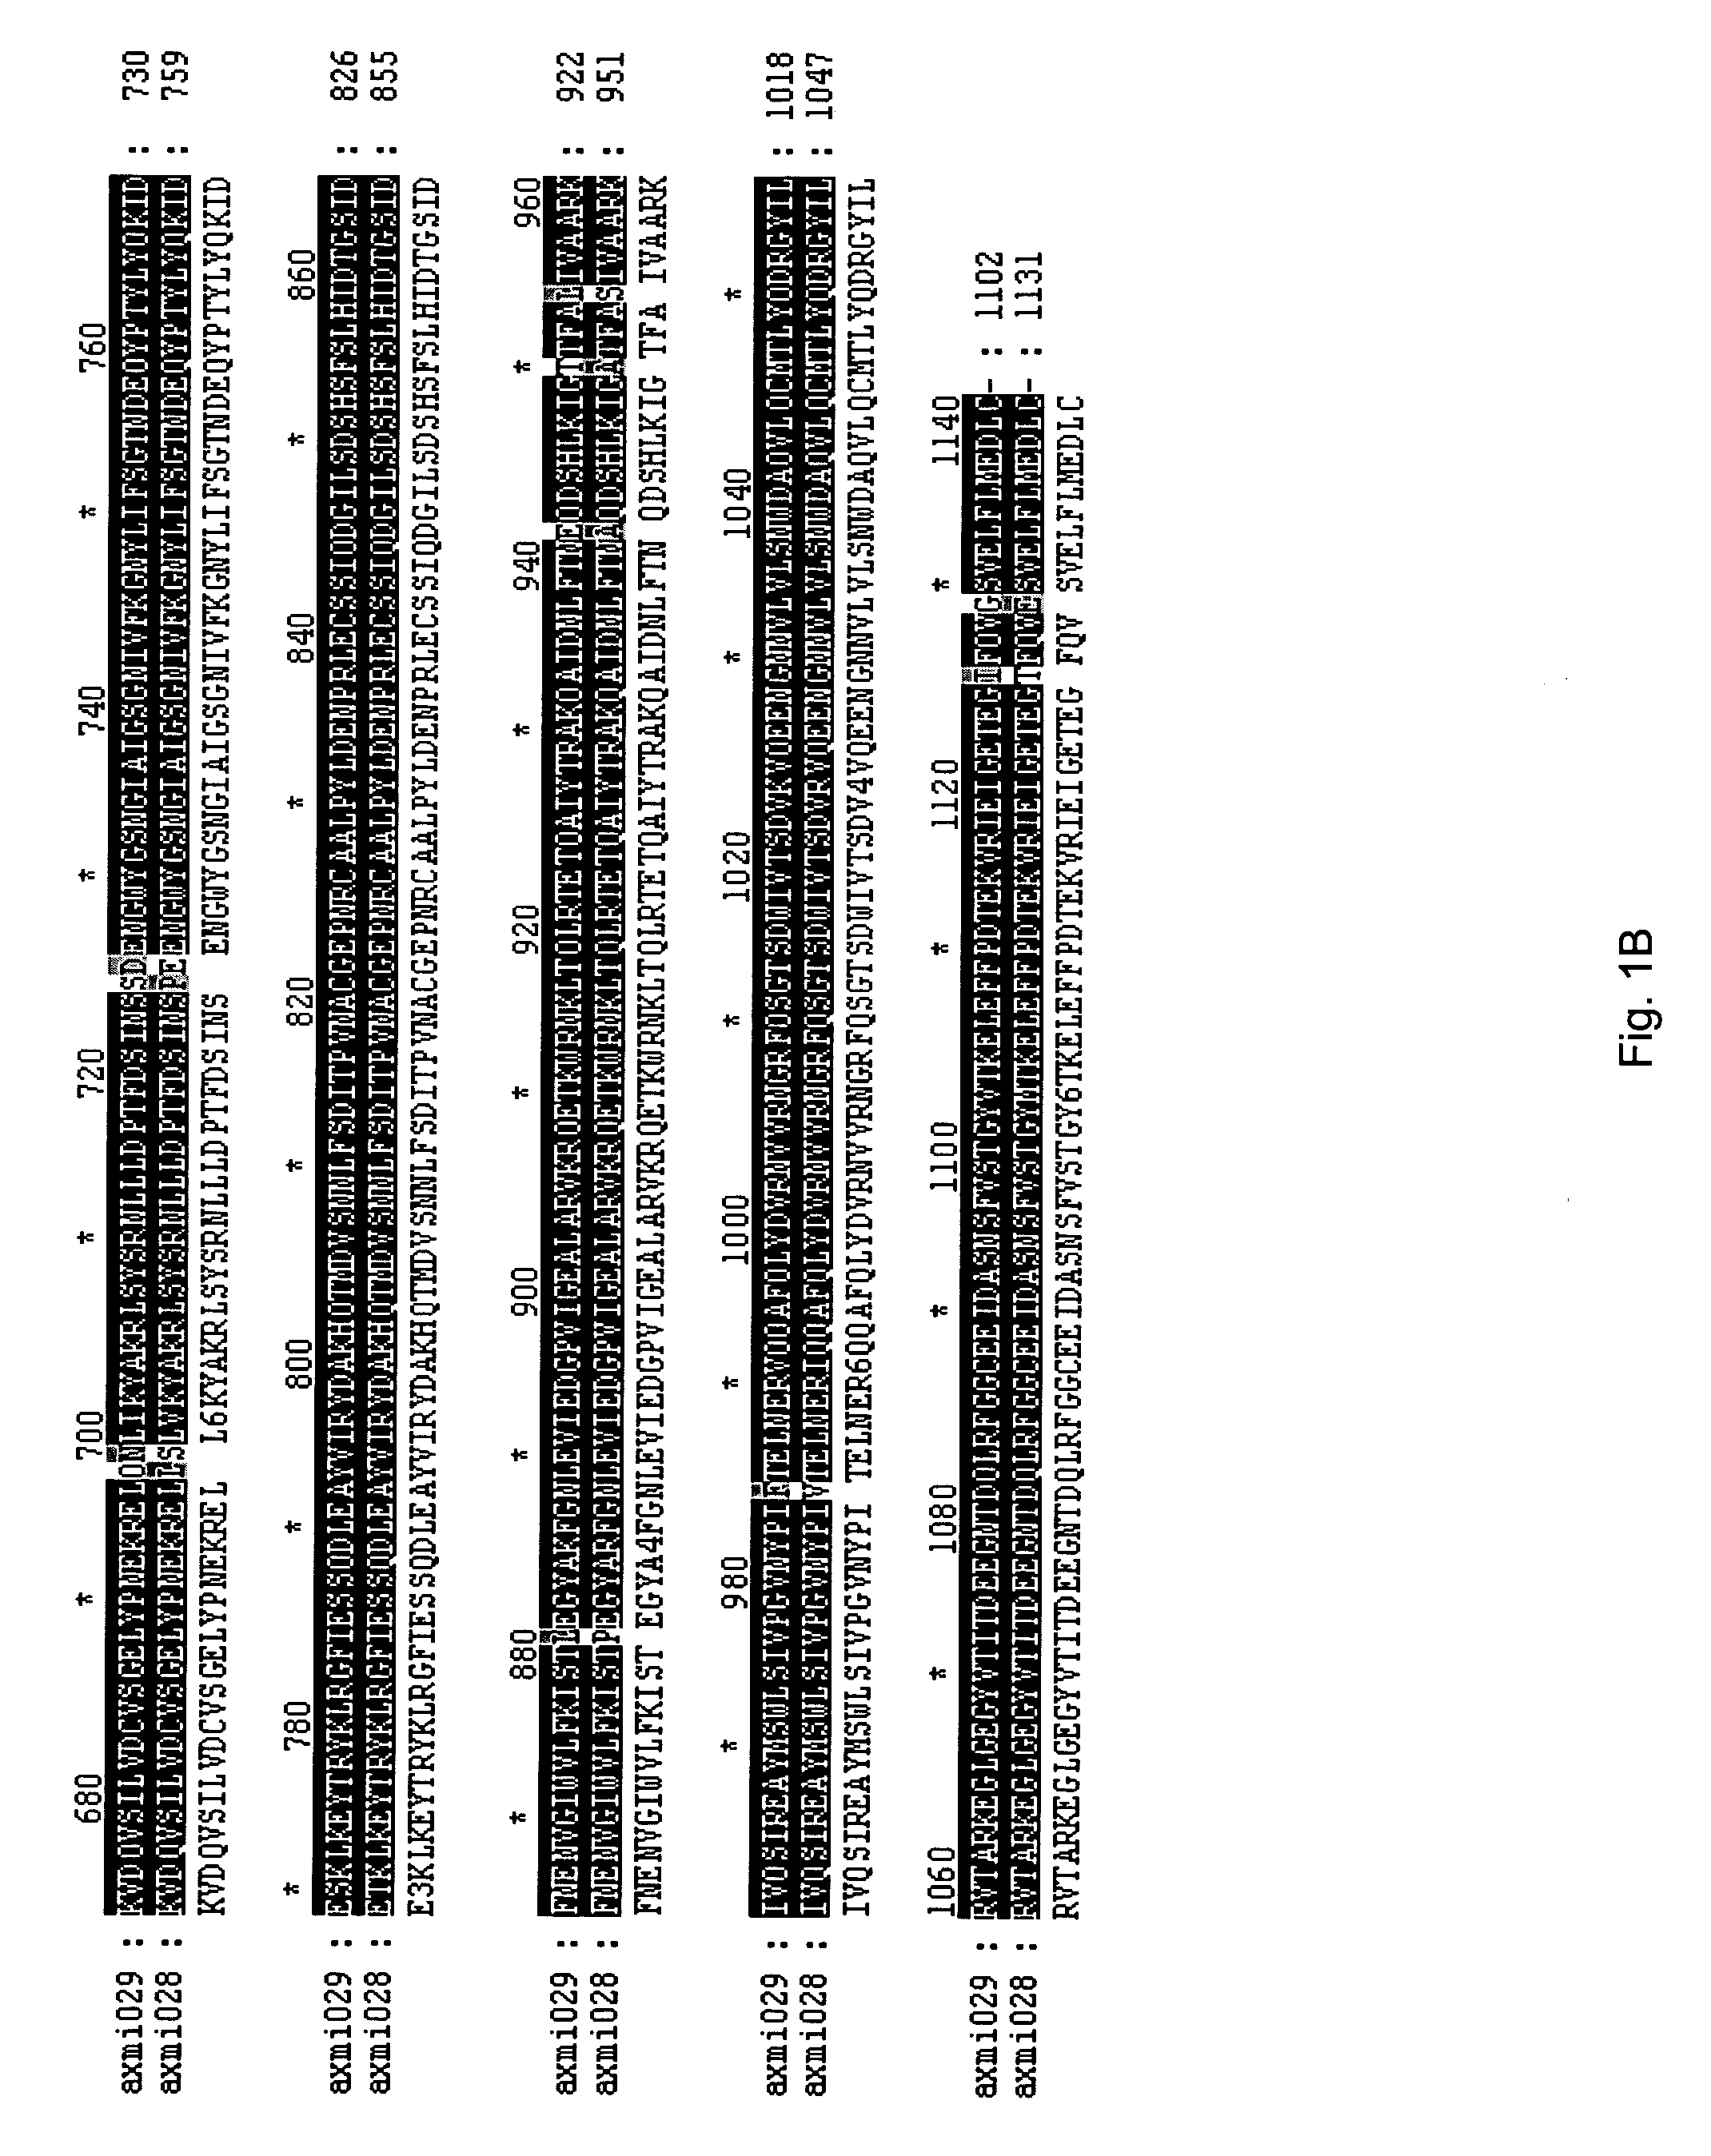 AXMI-028 and AXMI-029, a family of novel delta-endotoxin genes and methods for their use